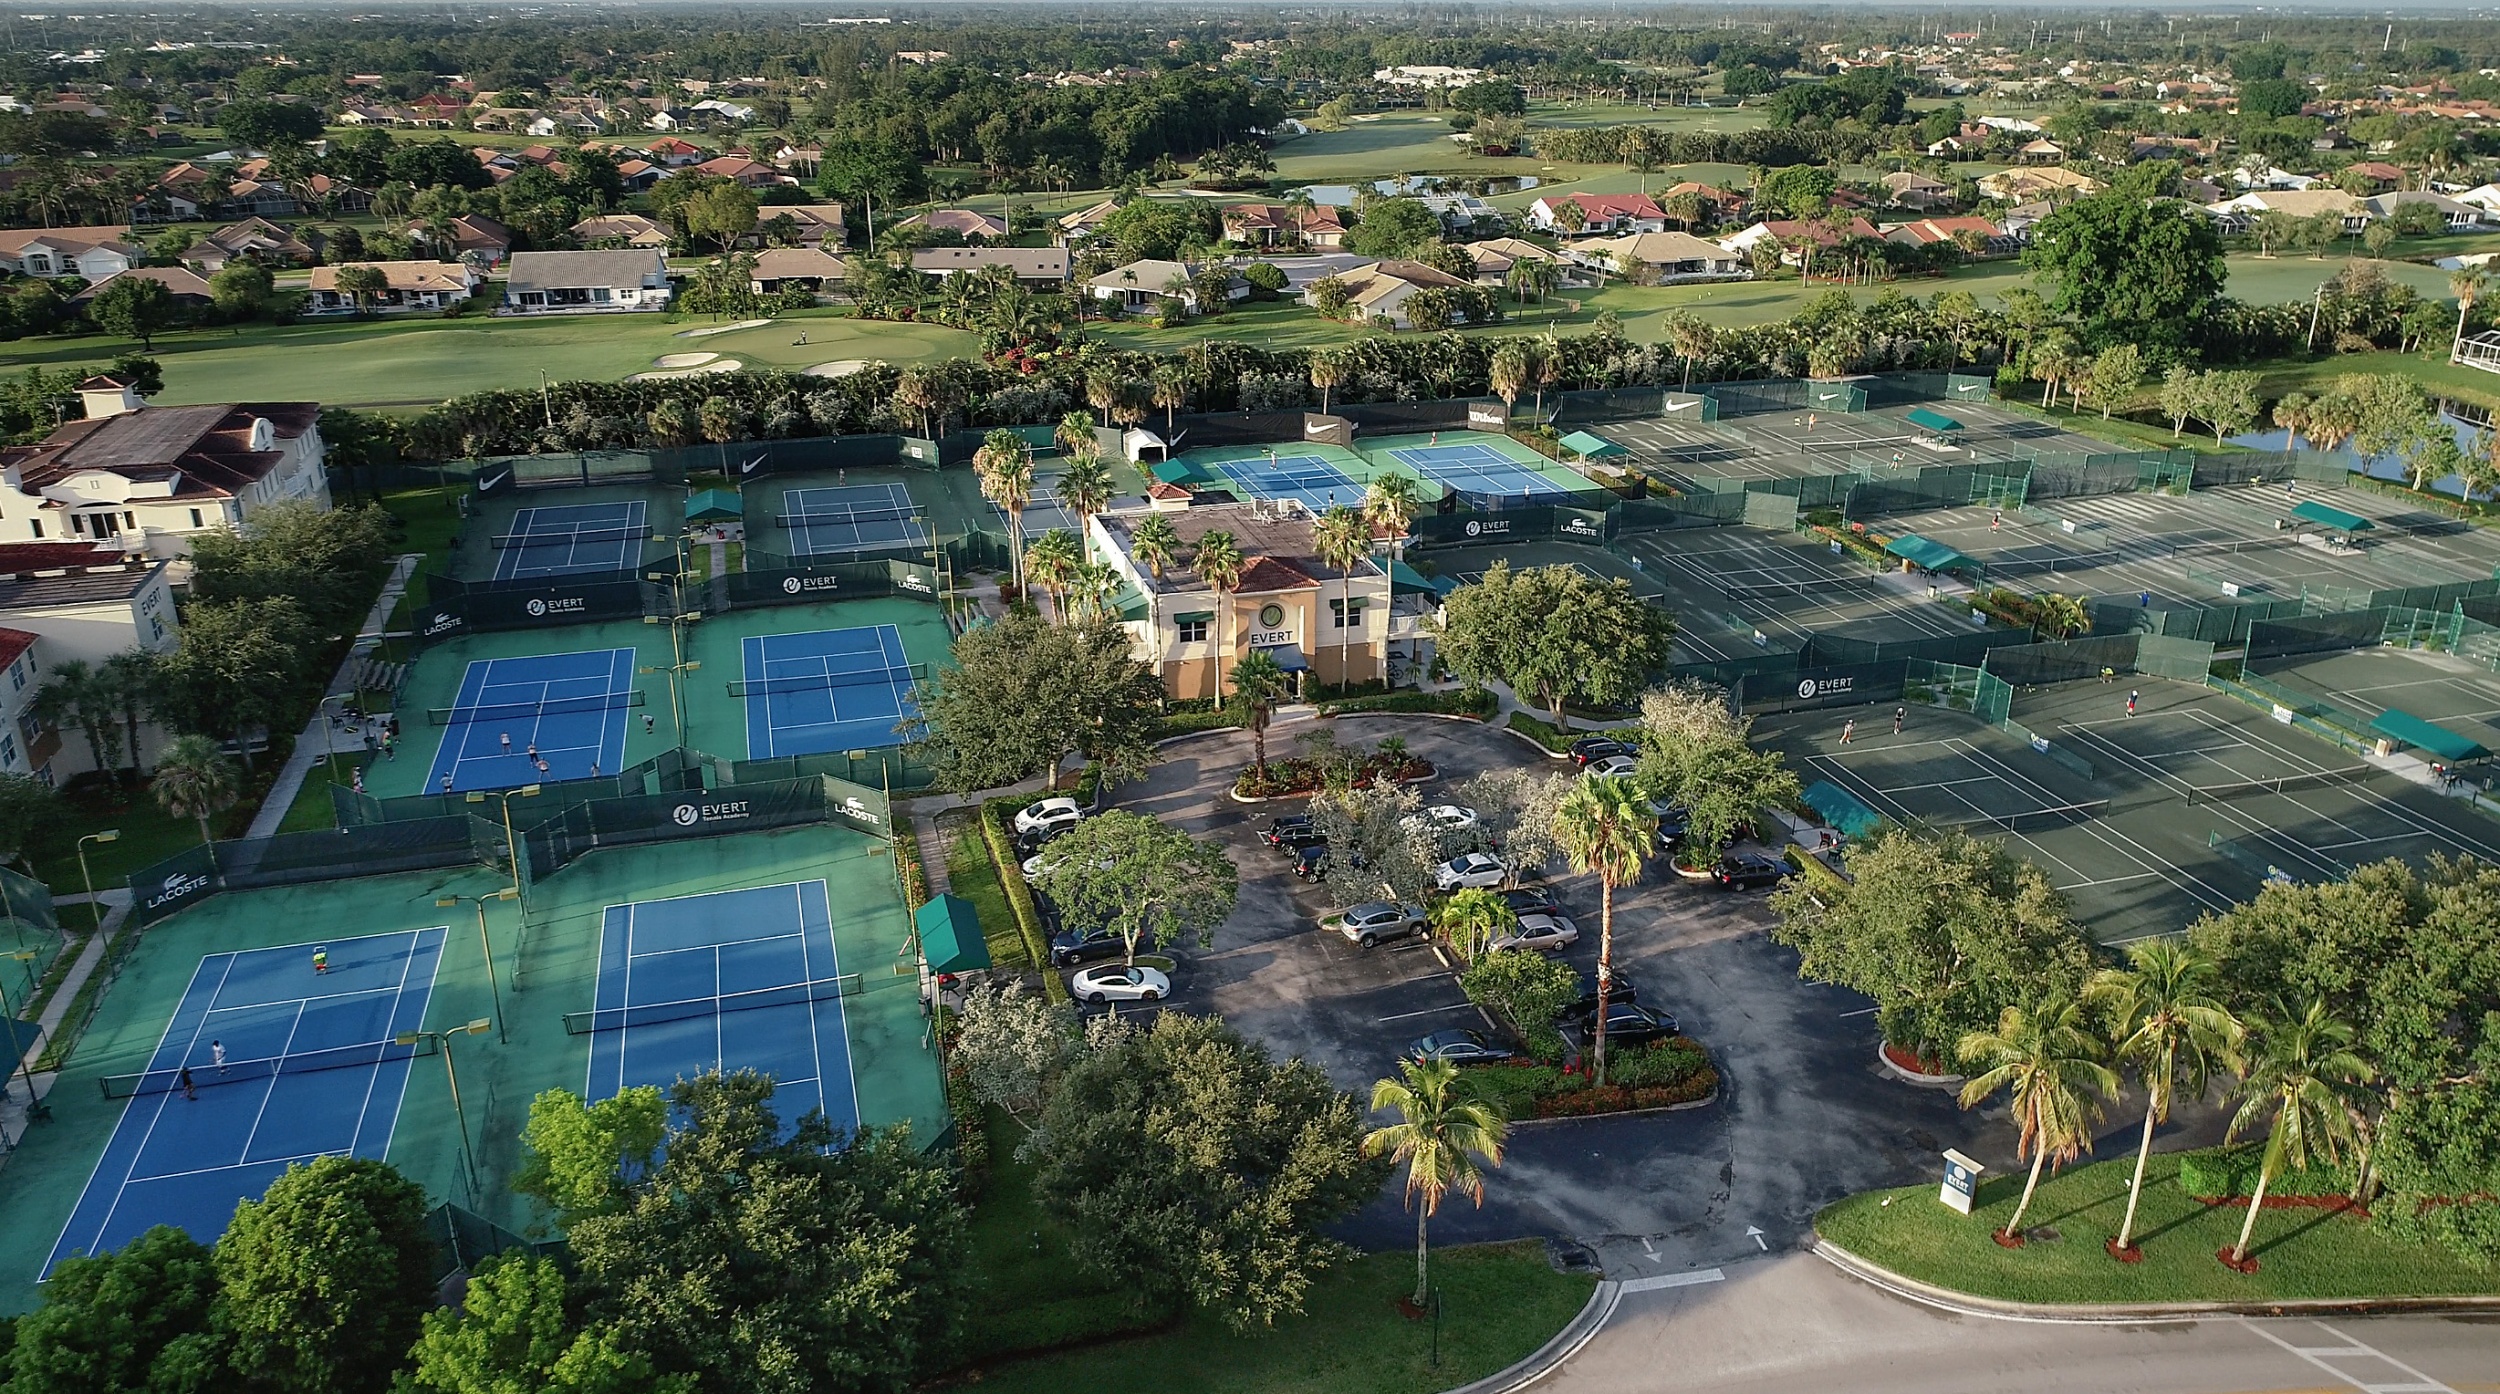 Evert tennis Facilities